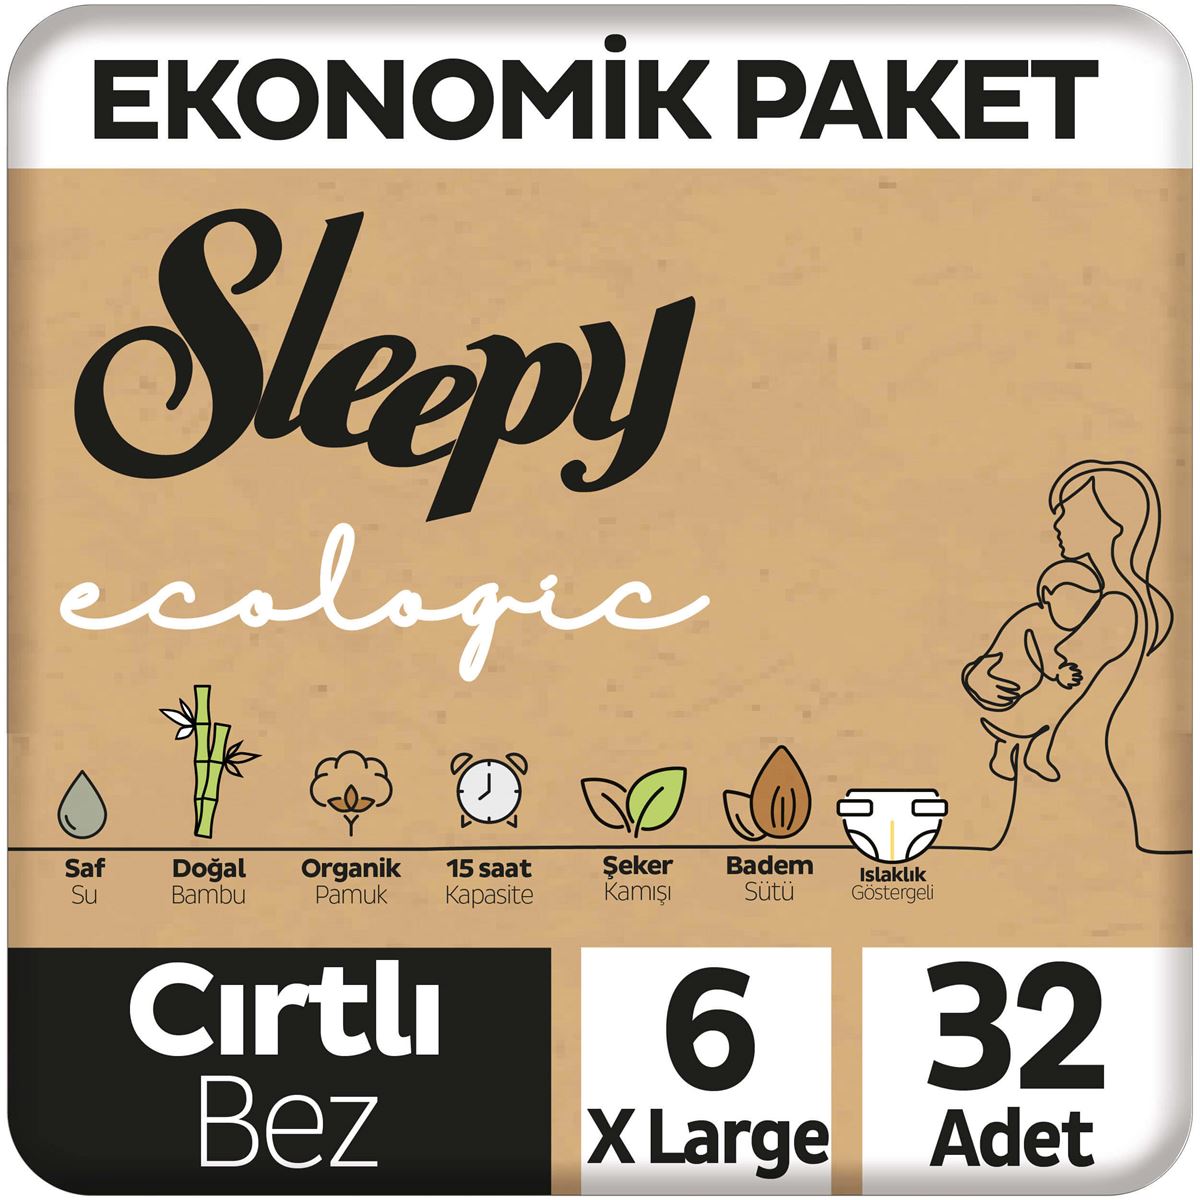 Sleepy Ecologic Ekonomik Paket Bebek Bezi 6 Numara Xlarge 32 Adet